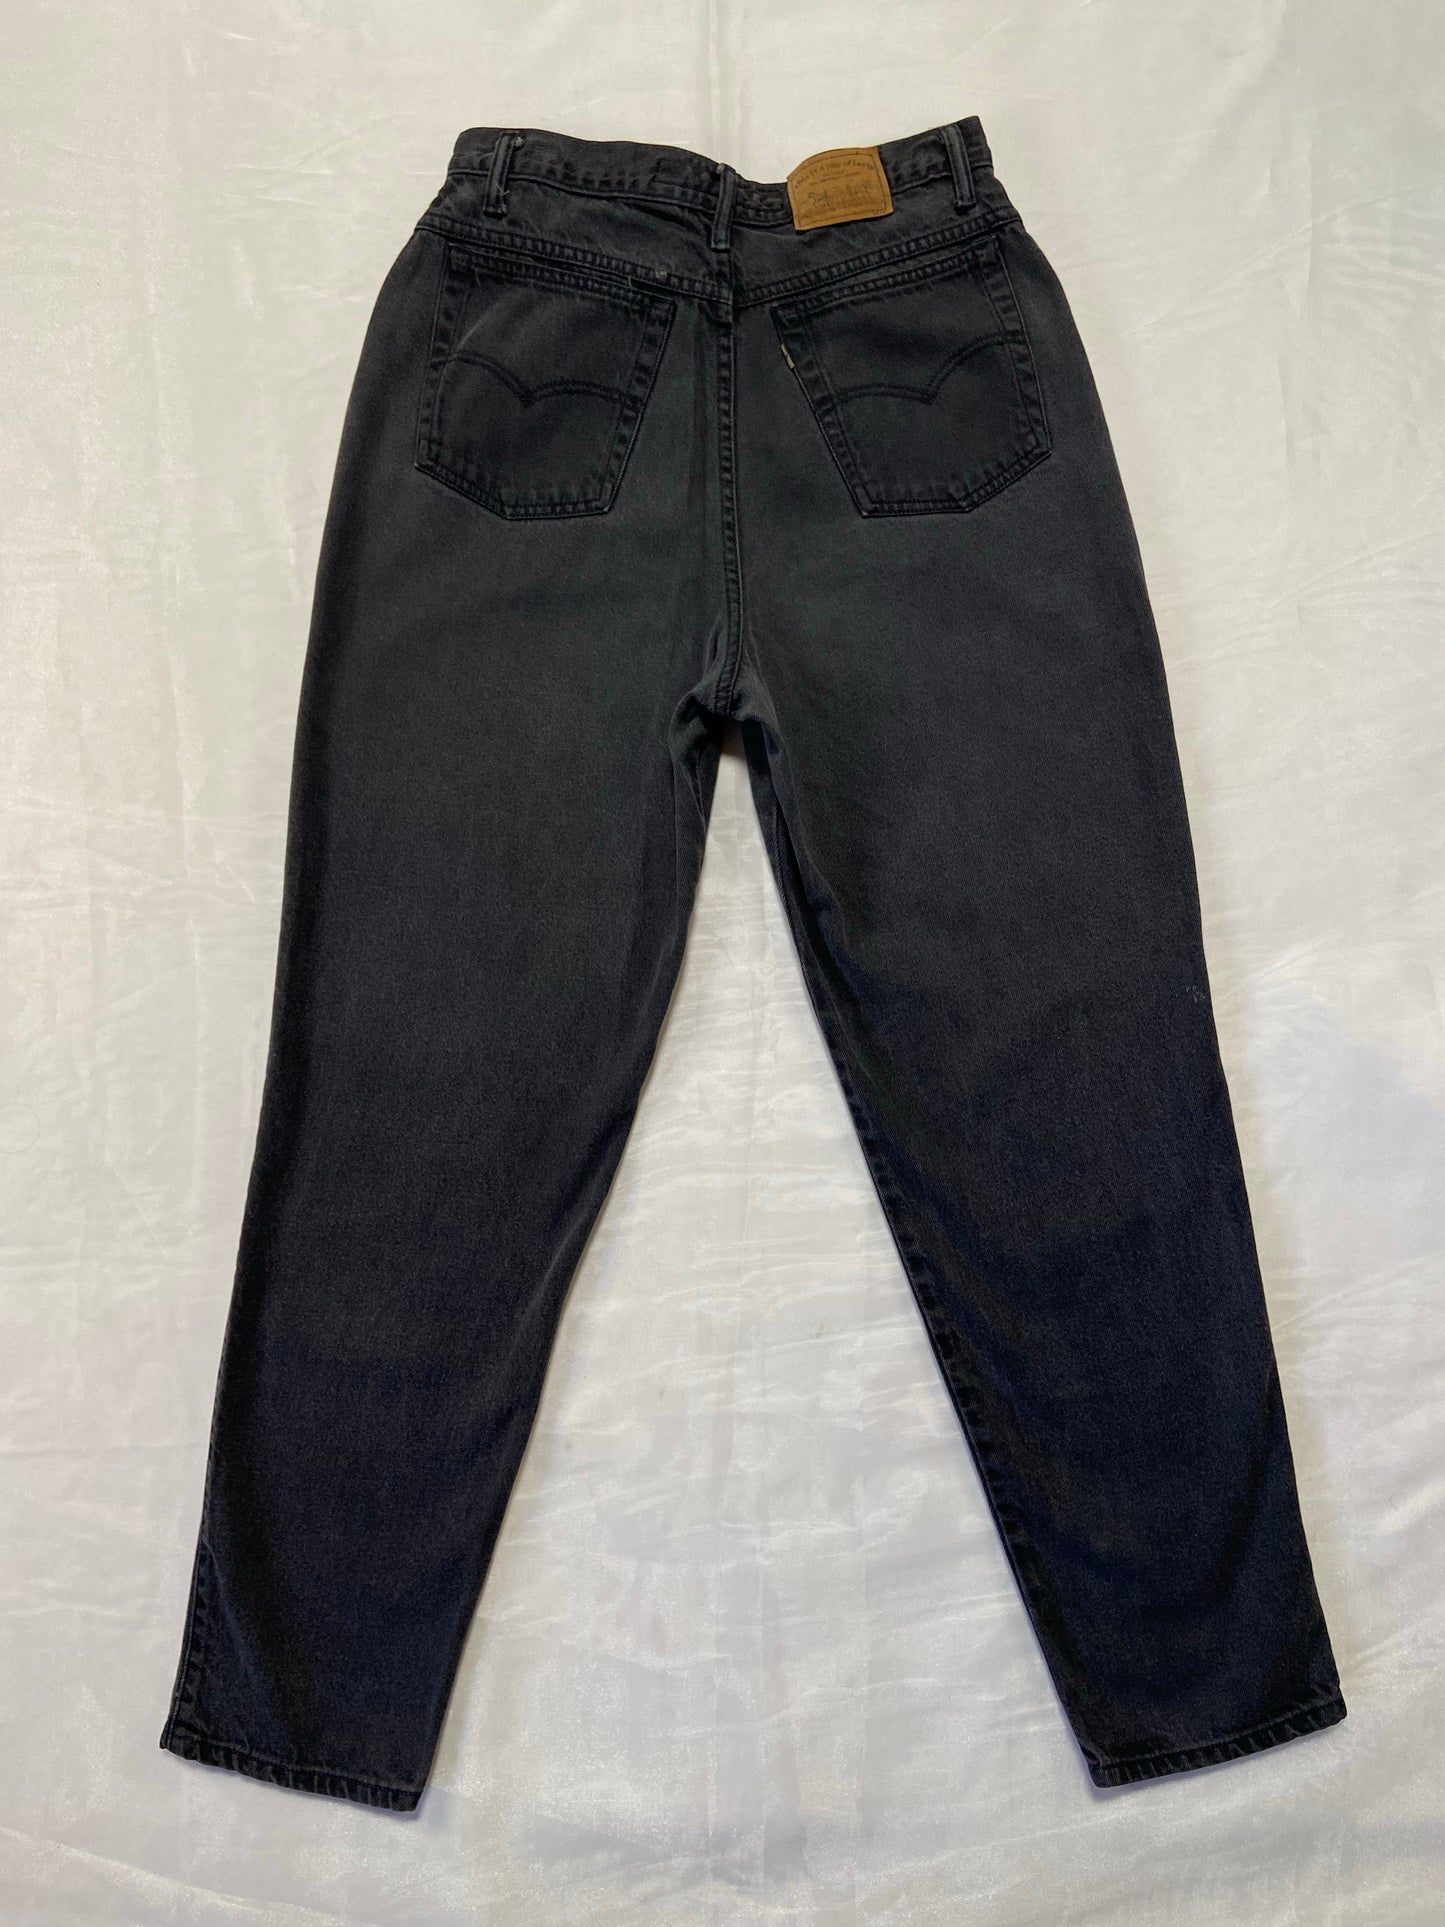 Black Levi’s Jeans - 29”